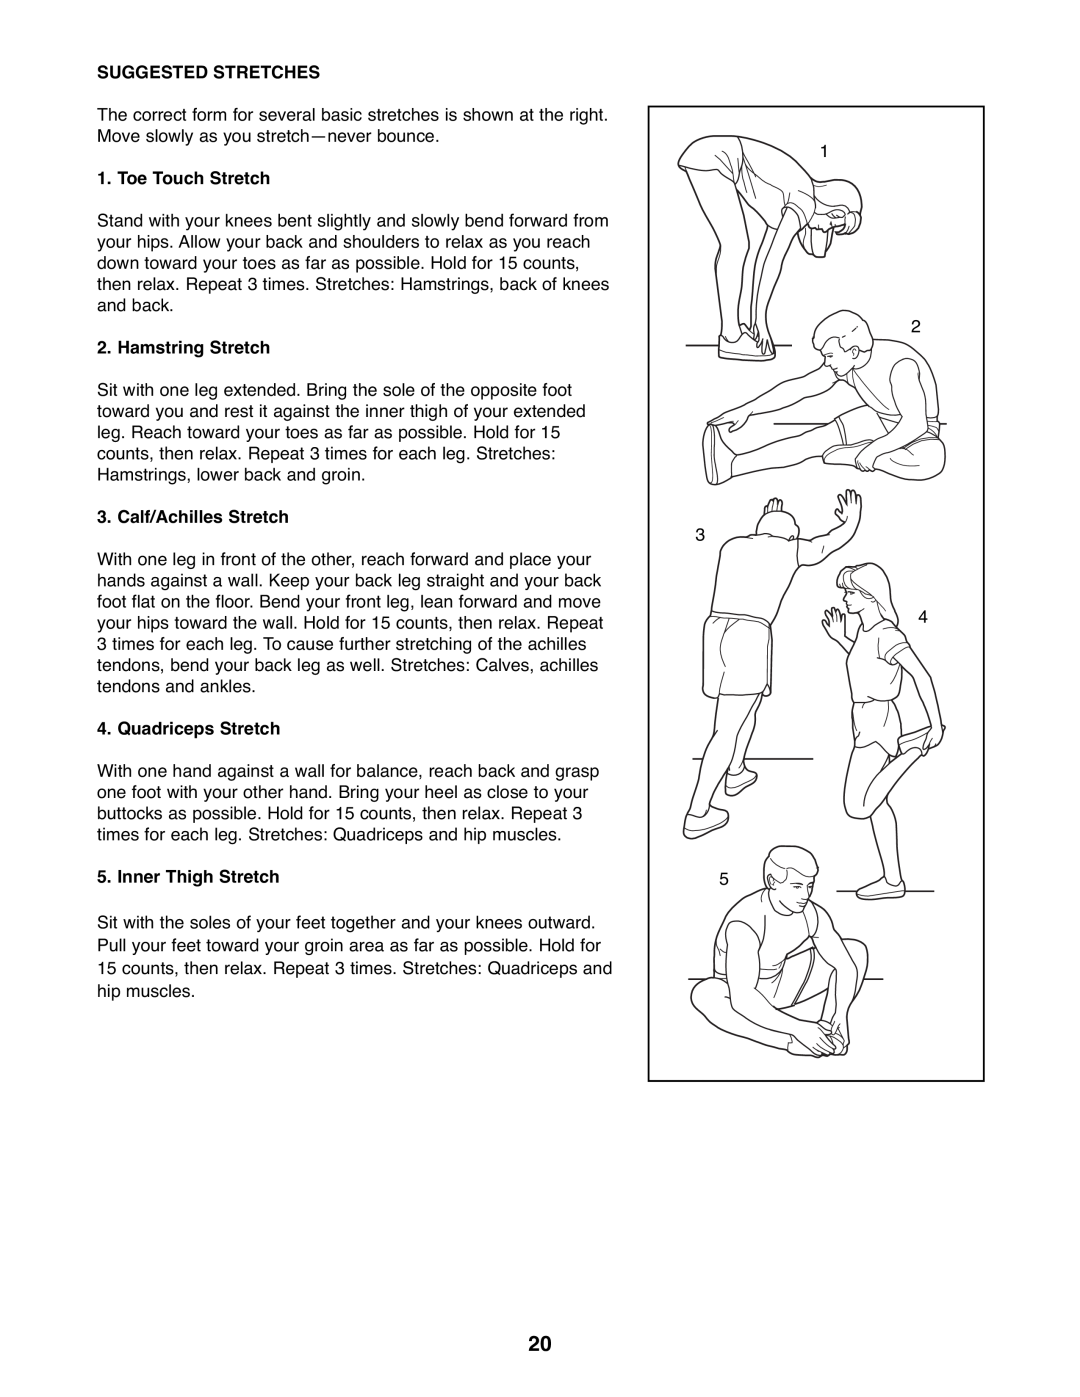 ProForm PFEL73207.0 Suggested Stretches, Toe Touch Stretch, Hamstring Stretch, Calf/Achilles Stretch, Quadriceps Stretch 